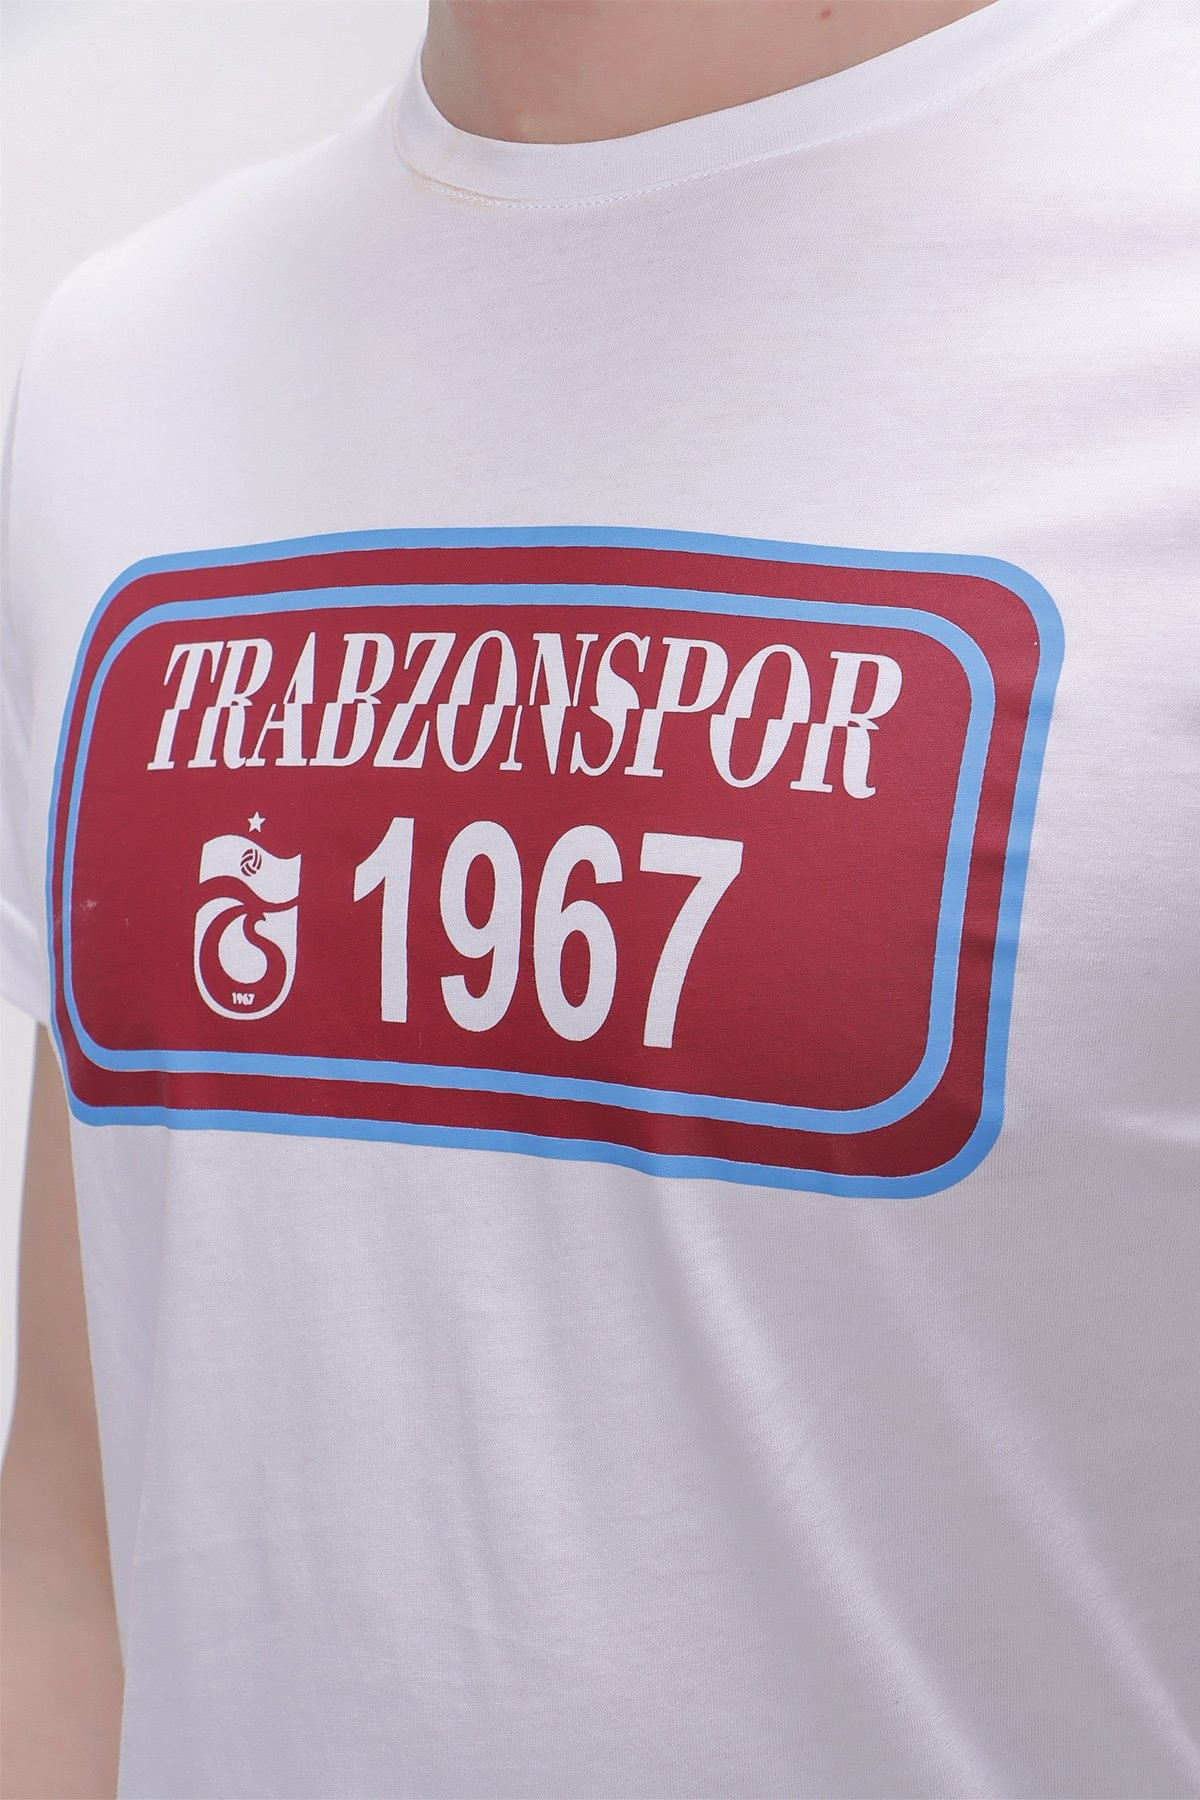 TSHİRT BİSİKLET YAKA TRABZONSPOR 1967 BASKILI